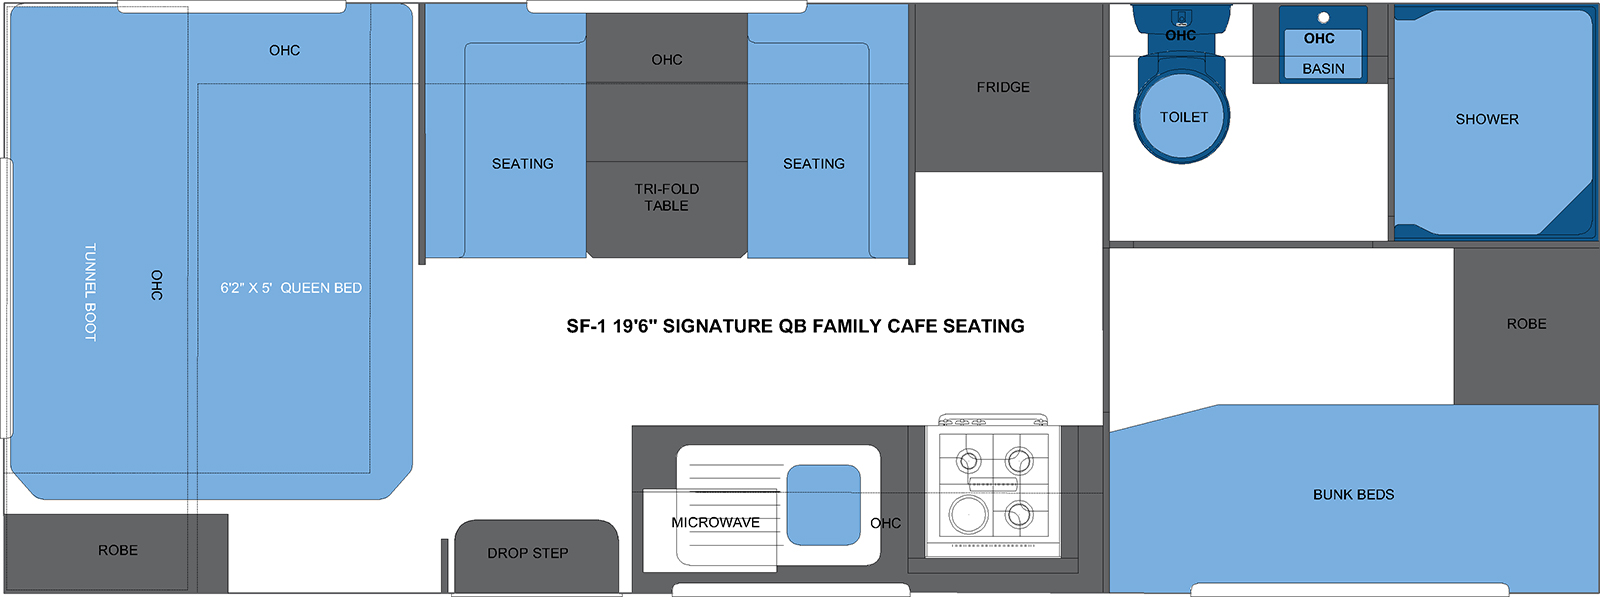 SF-1 19'6 SIGNATURE QB FAMILY CAFE SEATING CARAVAN